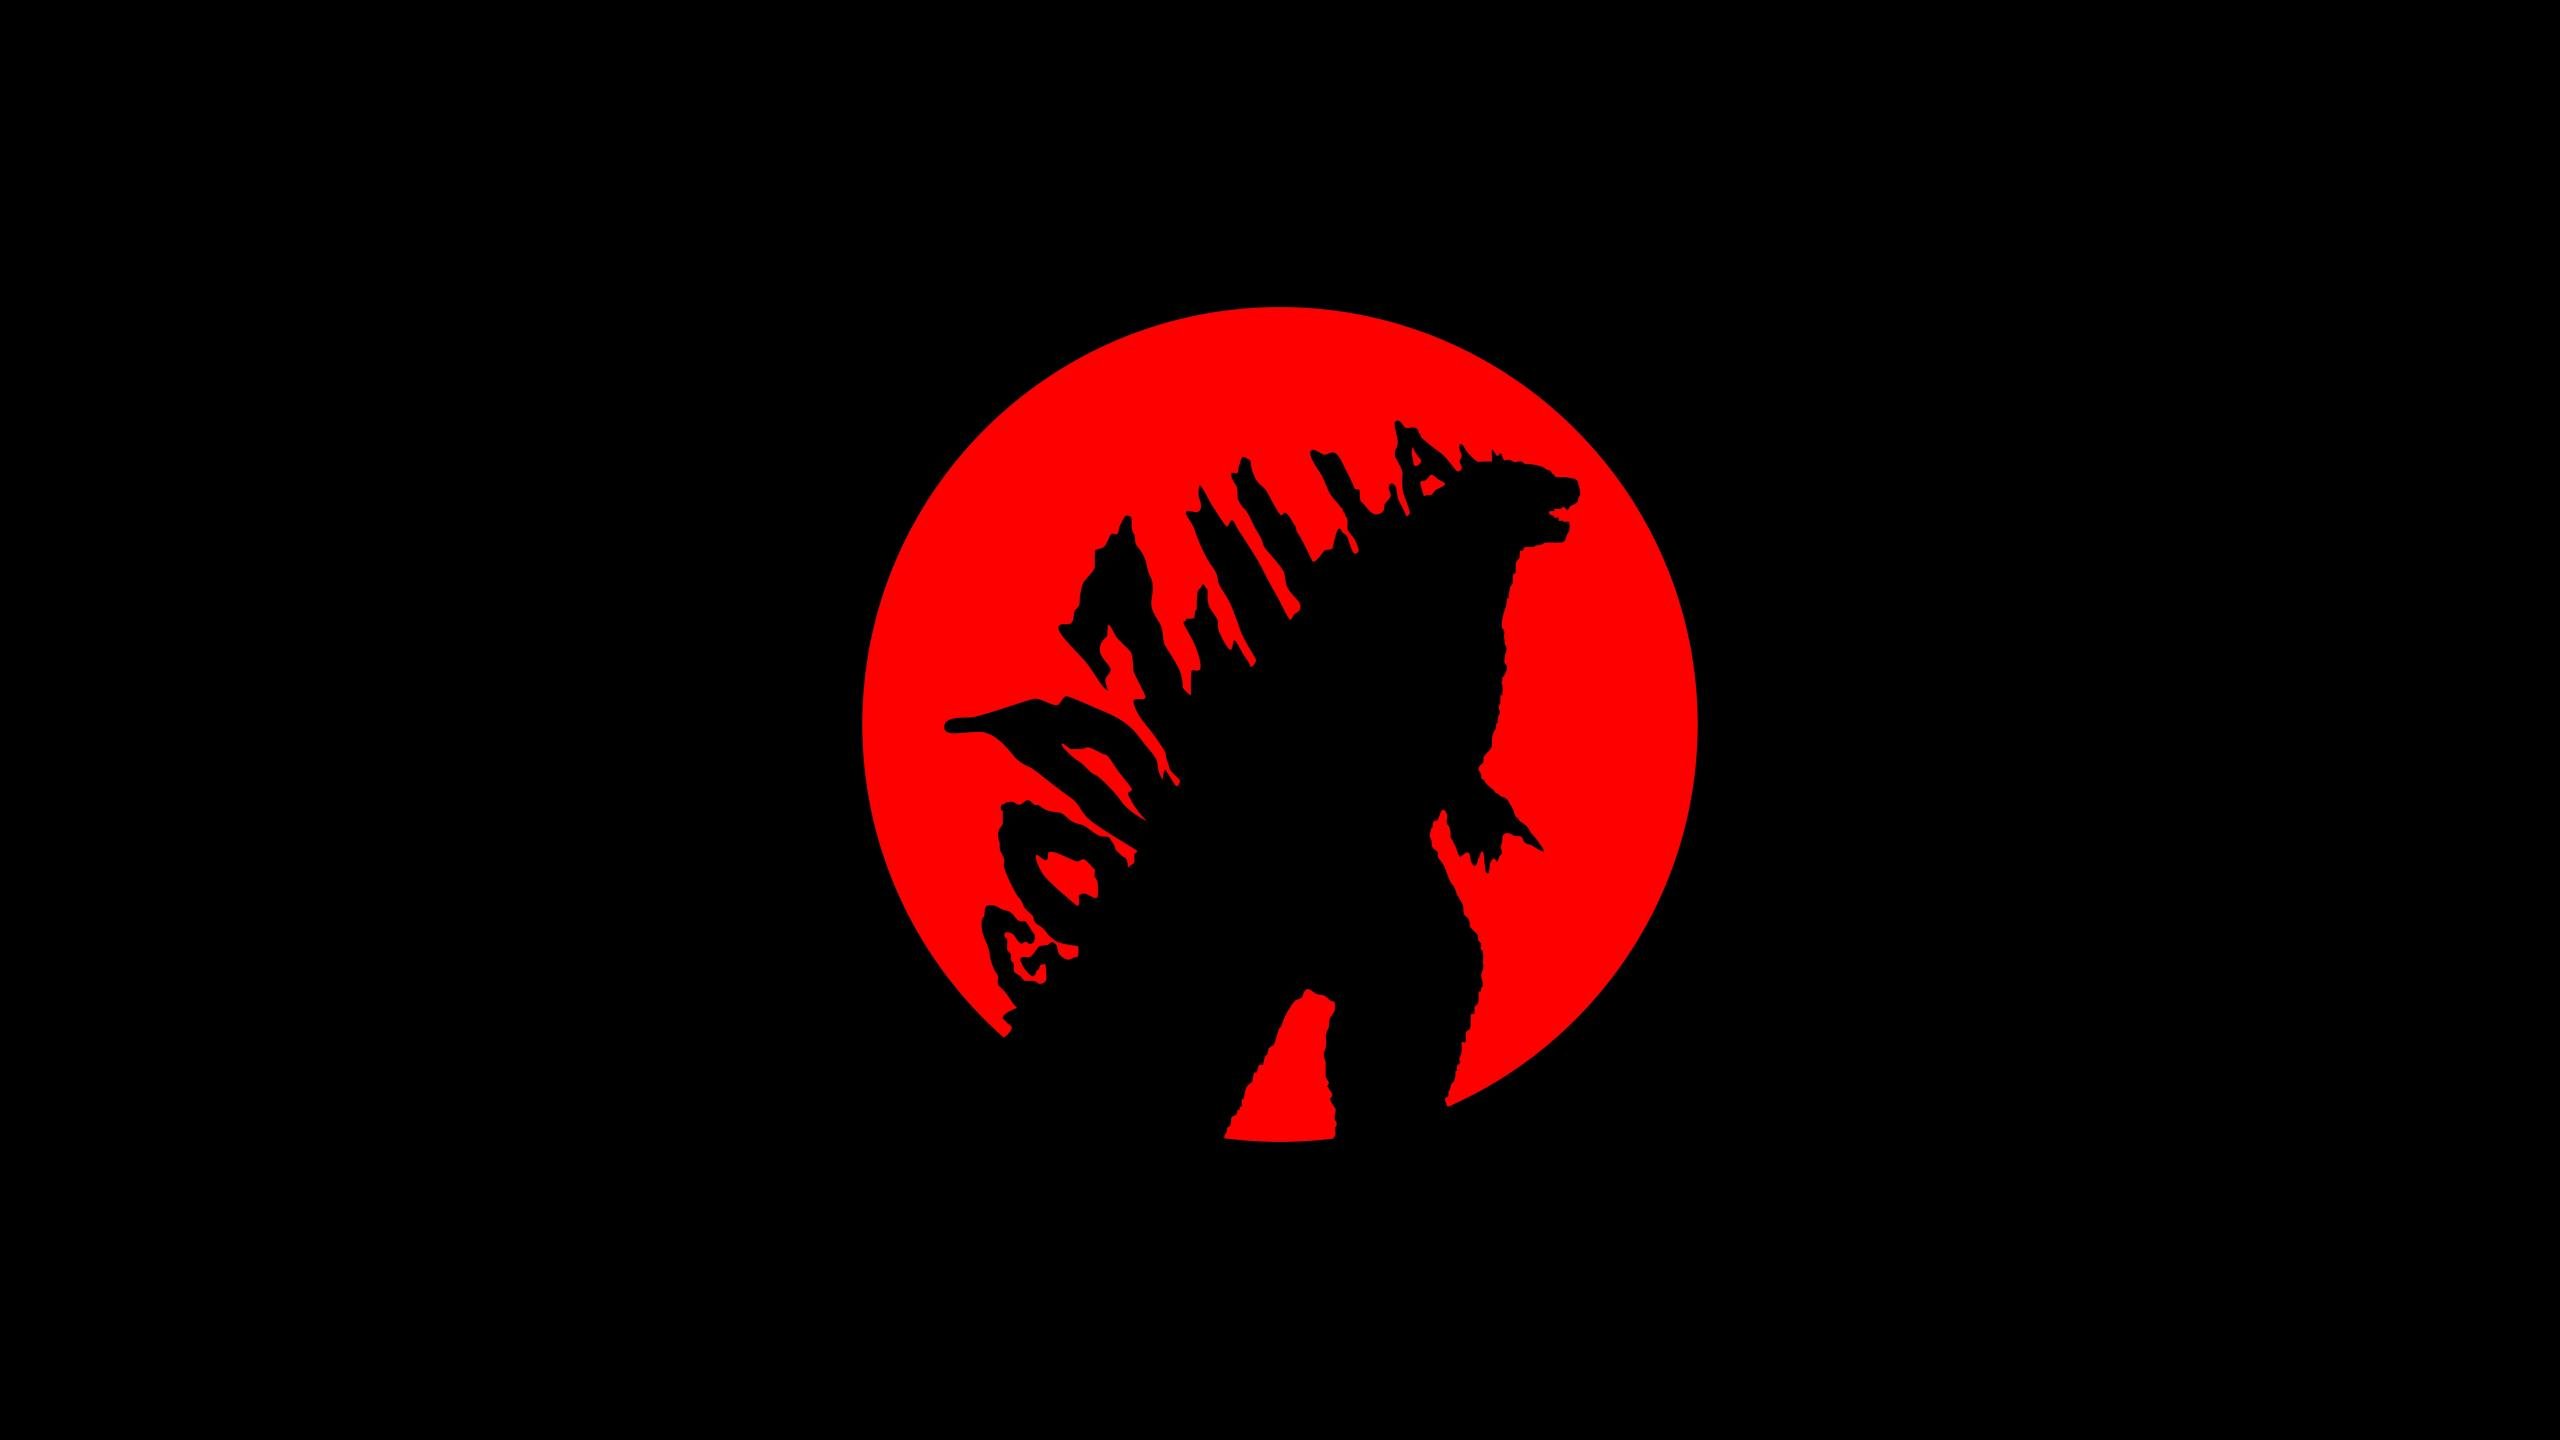 Awesome Godzilla (2014) free wallpaper ID:315653 for hd 2560x1440 computer